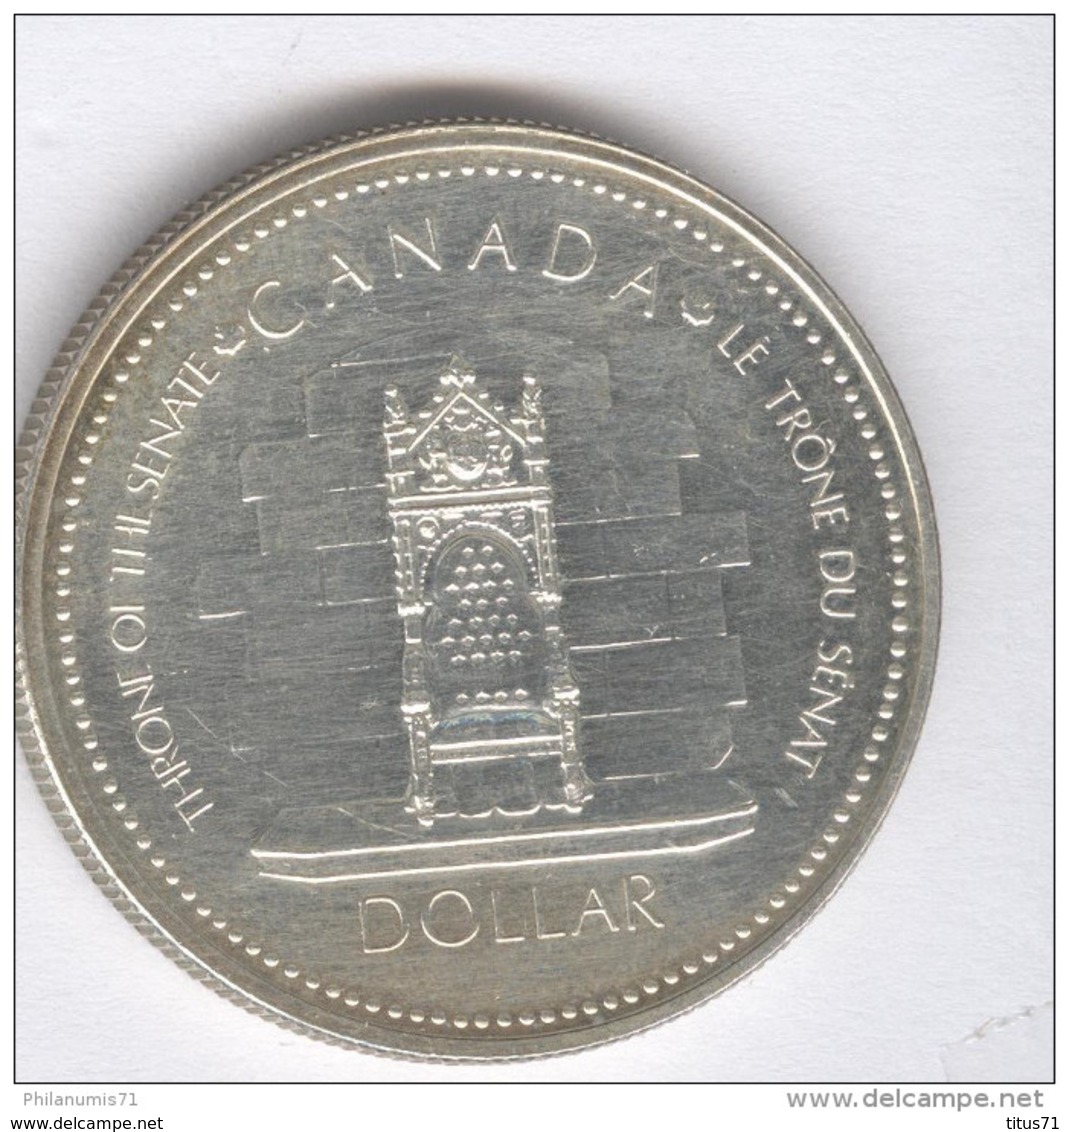 1 Dollar Canada 1977 - Commémorative - Jubilée Elisabeth II - Argent - KM# 118 - Canada